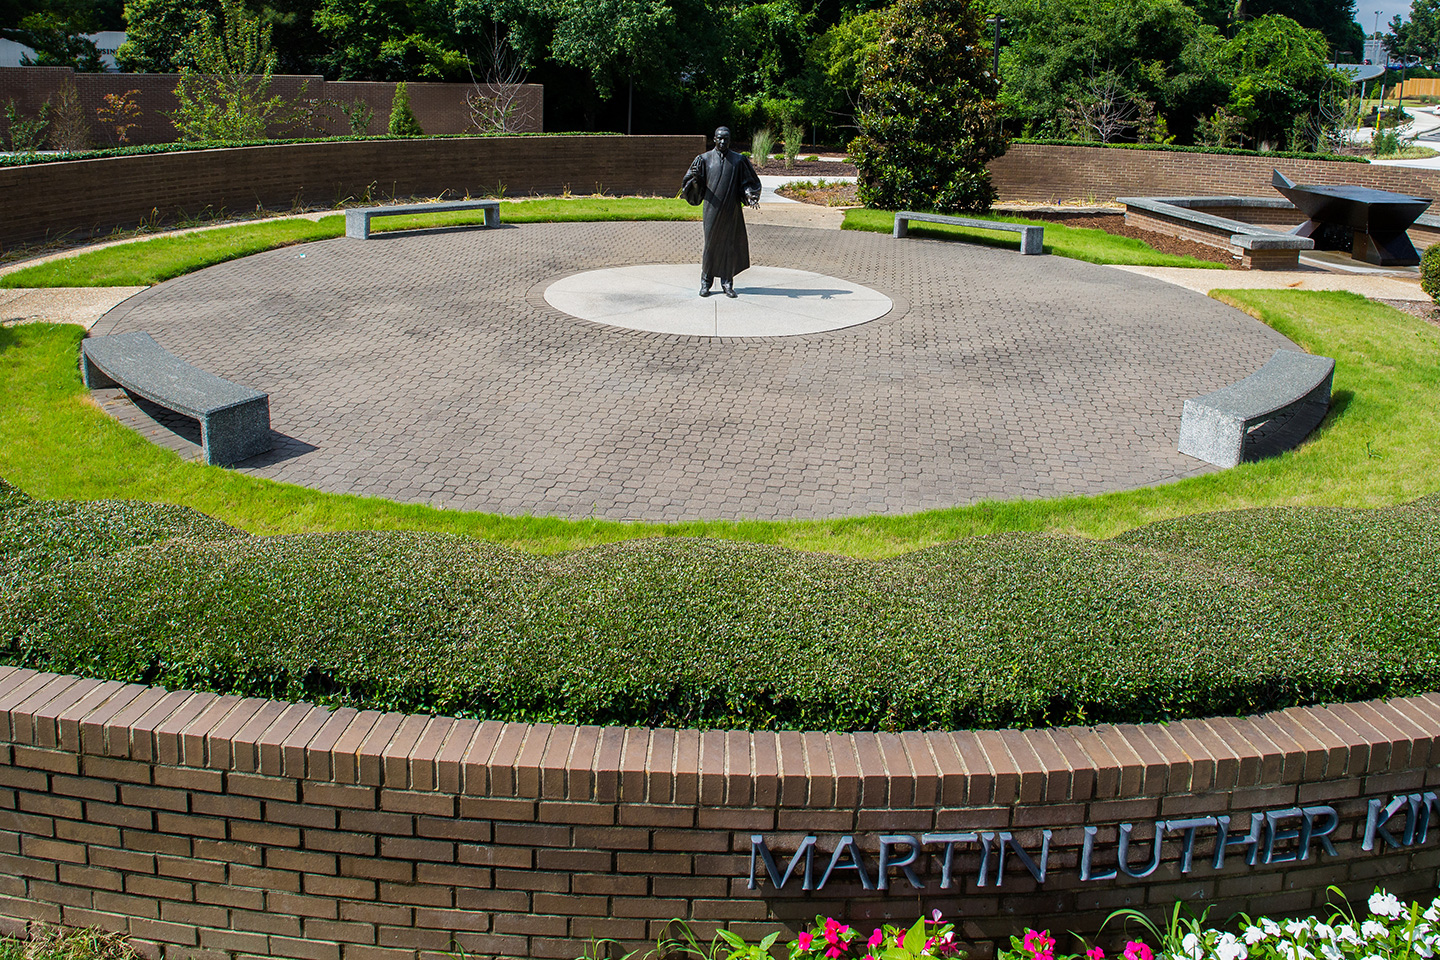 Martin Luther King Jr. Memorial Gardens